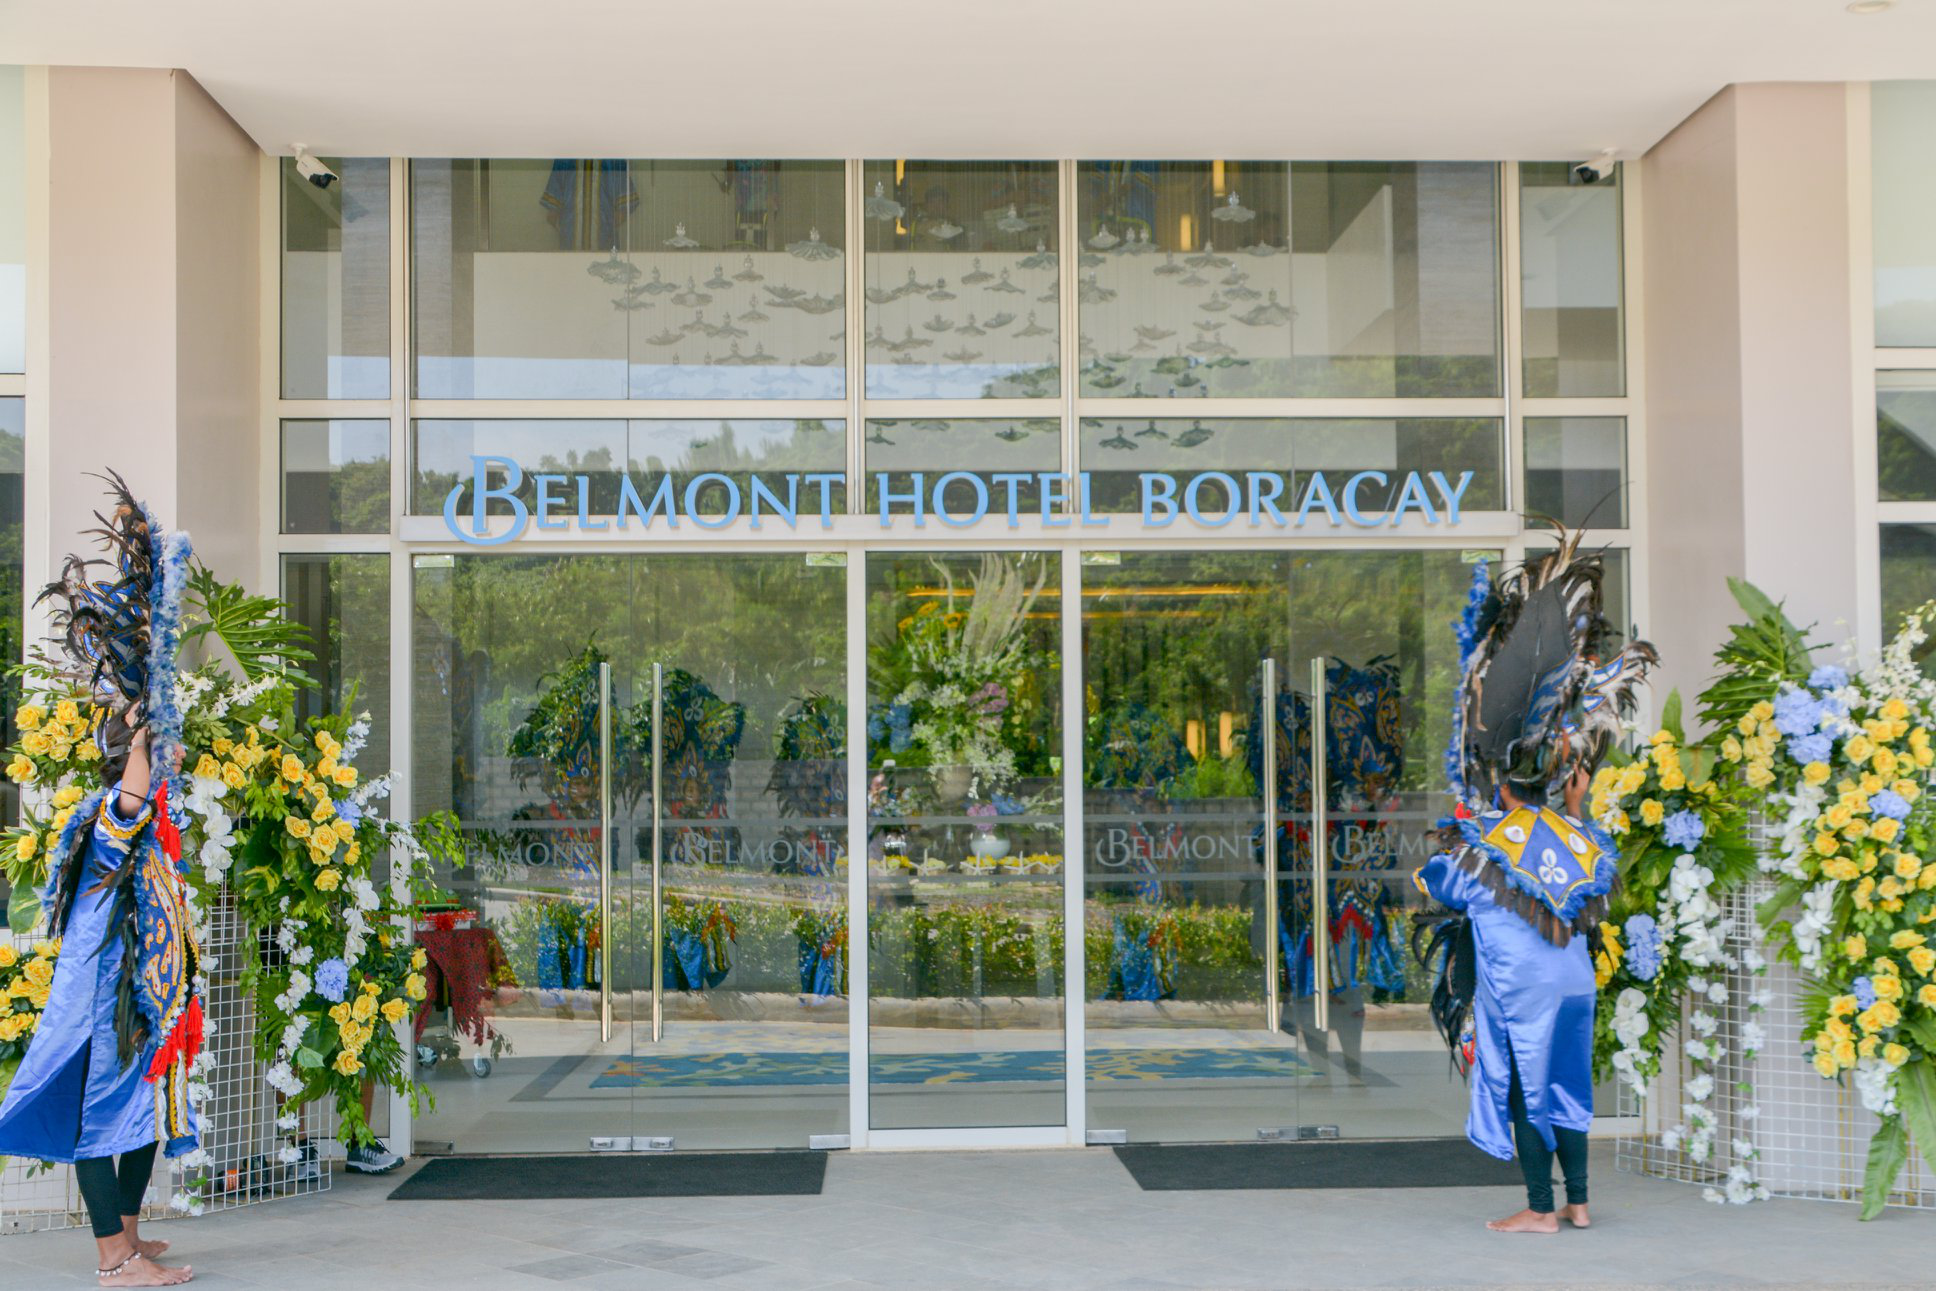 Facade of Belmont Hotel Boracay